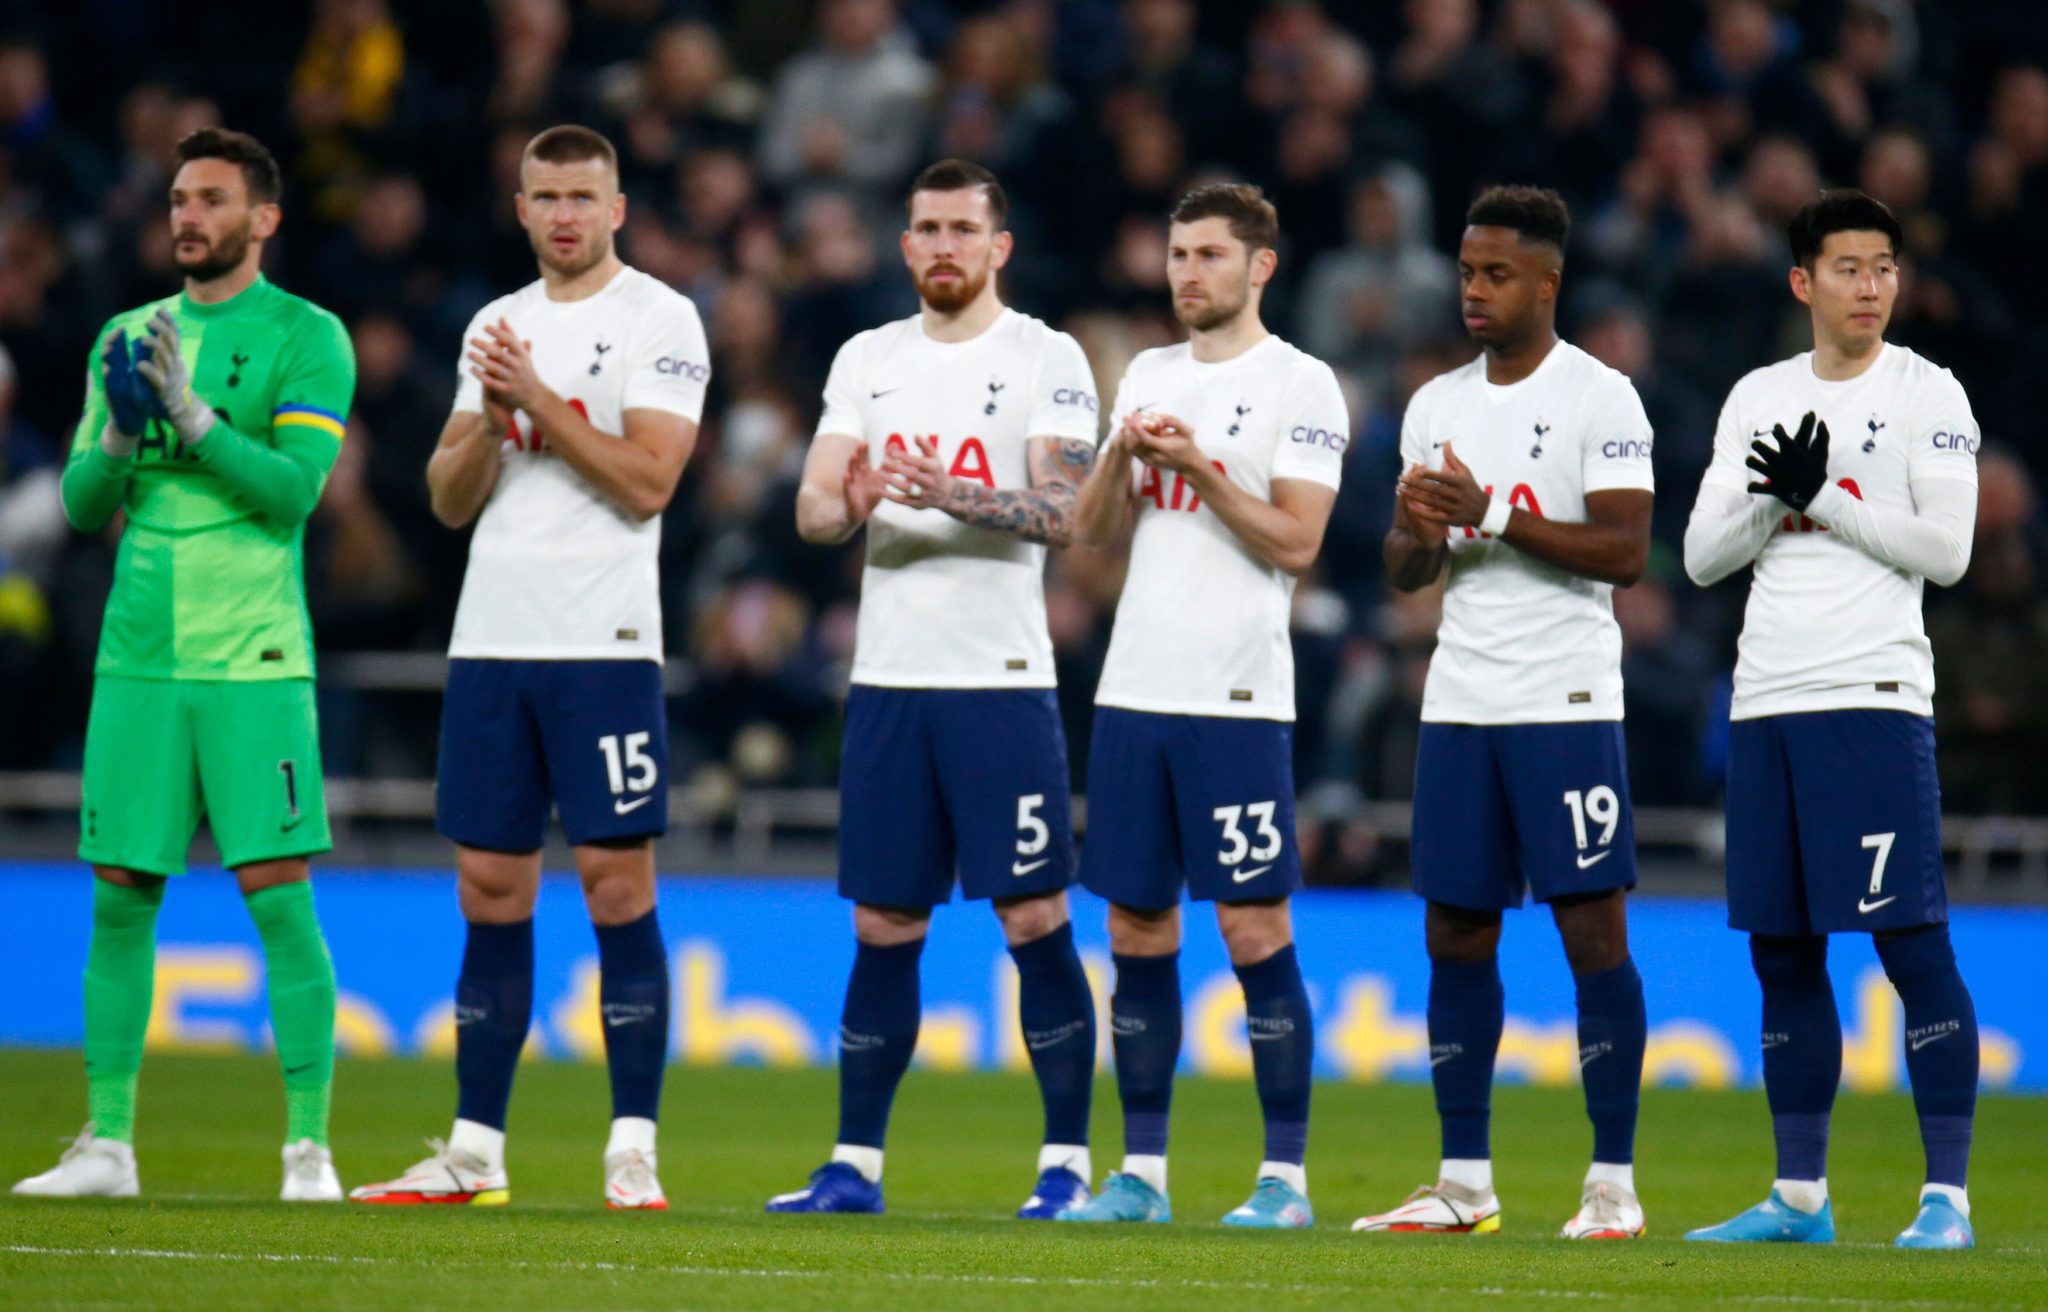 Tottenham players line up